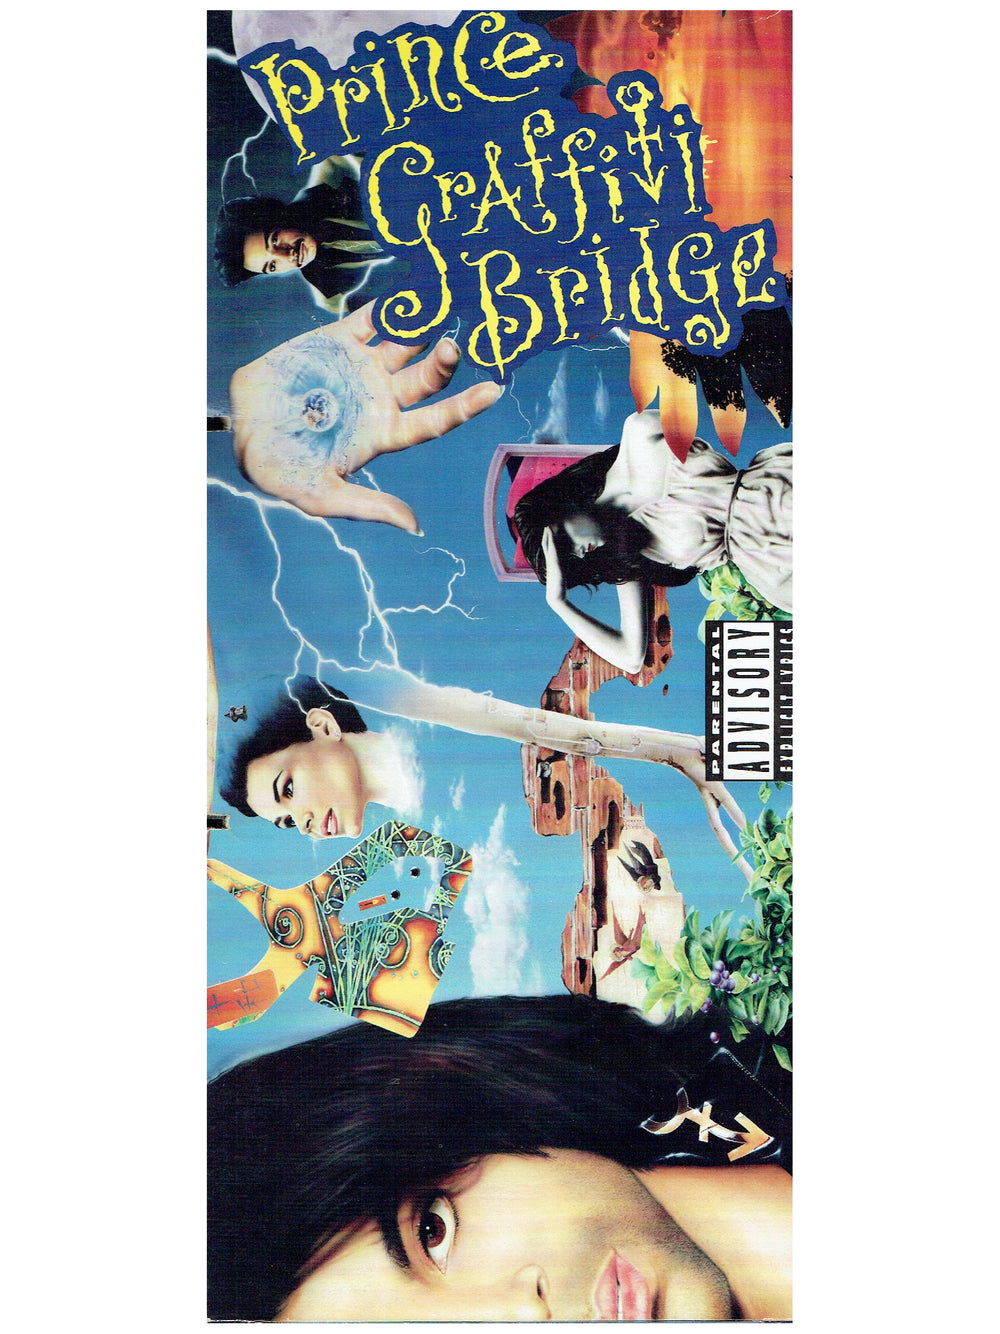 Prince – Graffiti Bridge Compact Disc CD Album Long Box USA Release